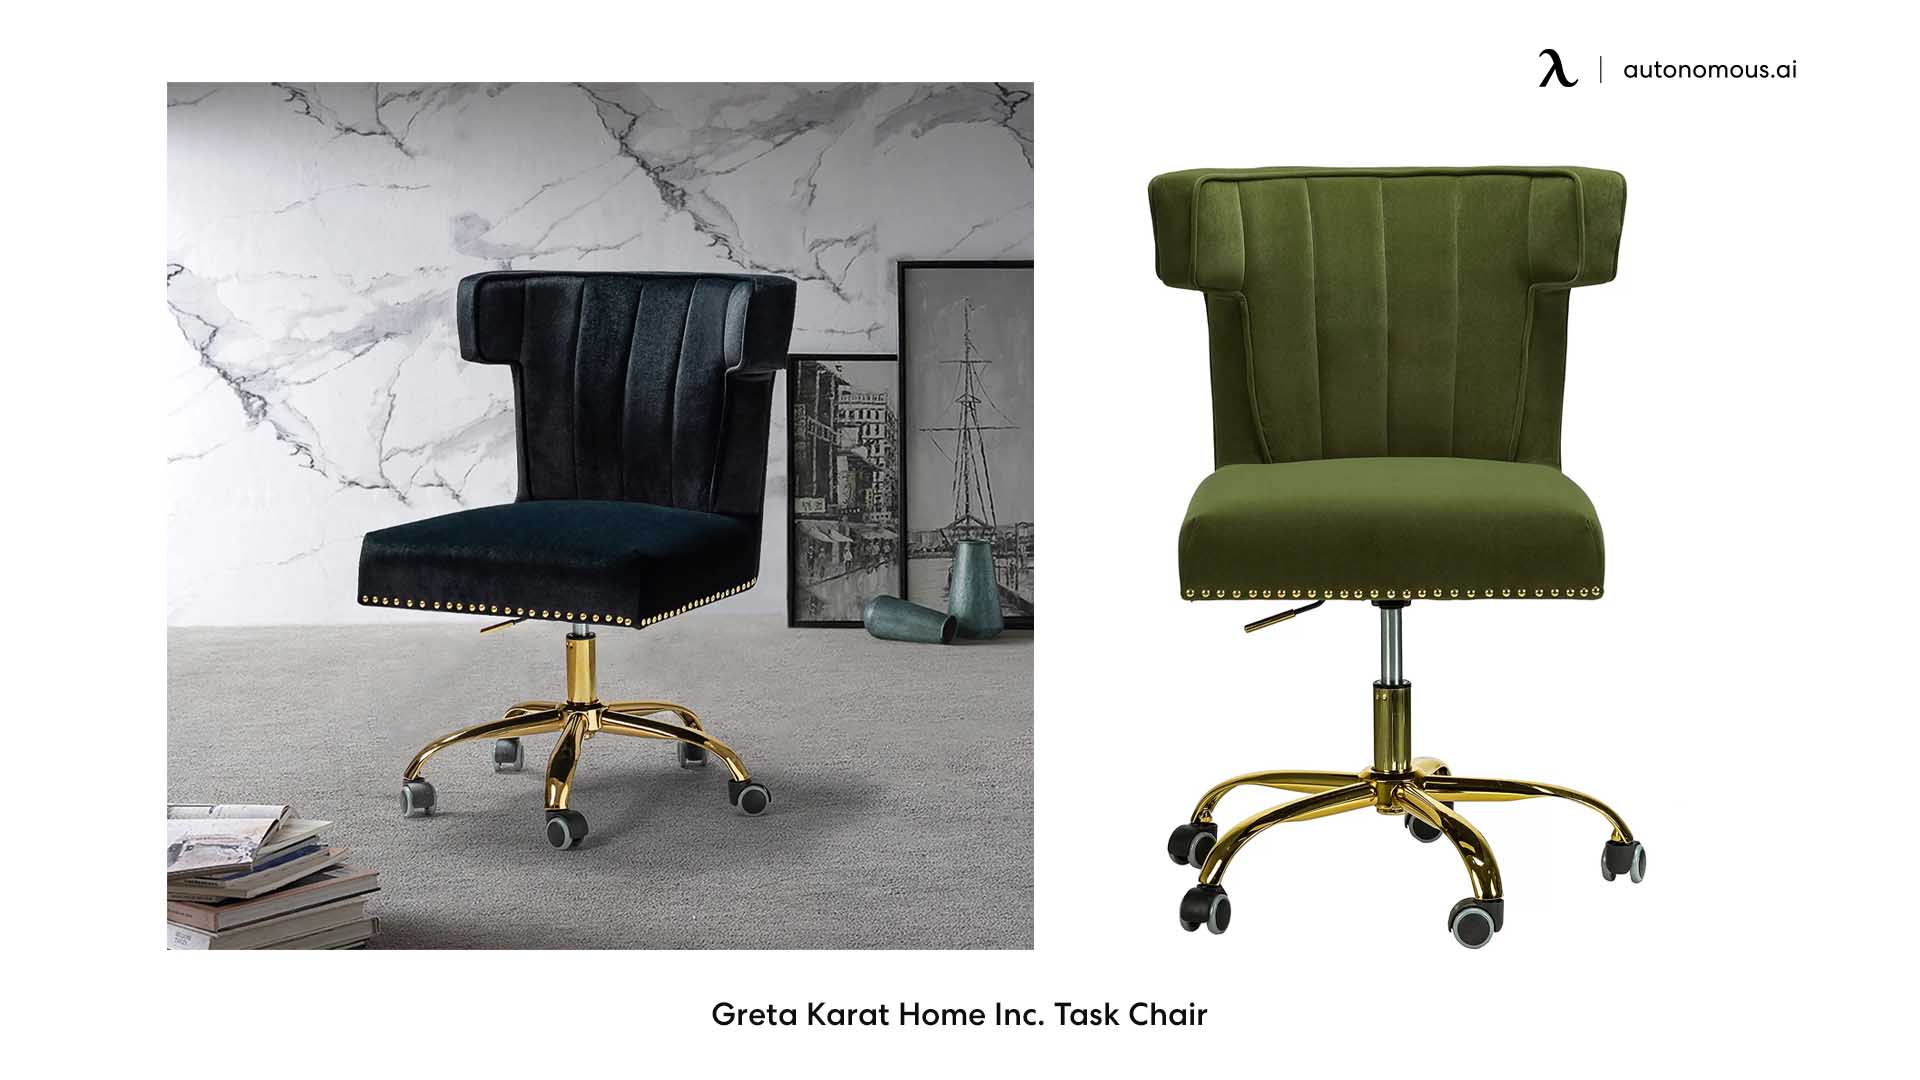 Greta Karat Home Inc. Task Chair